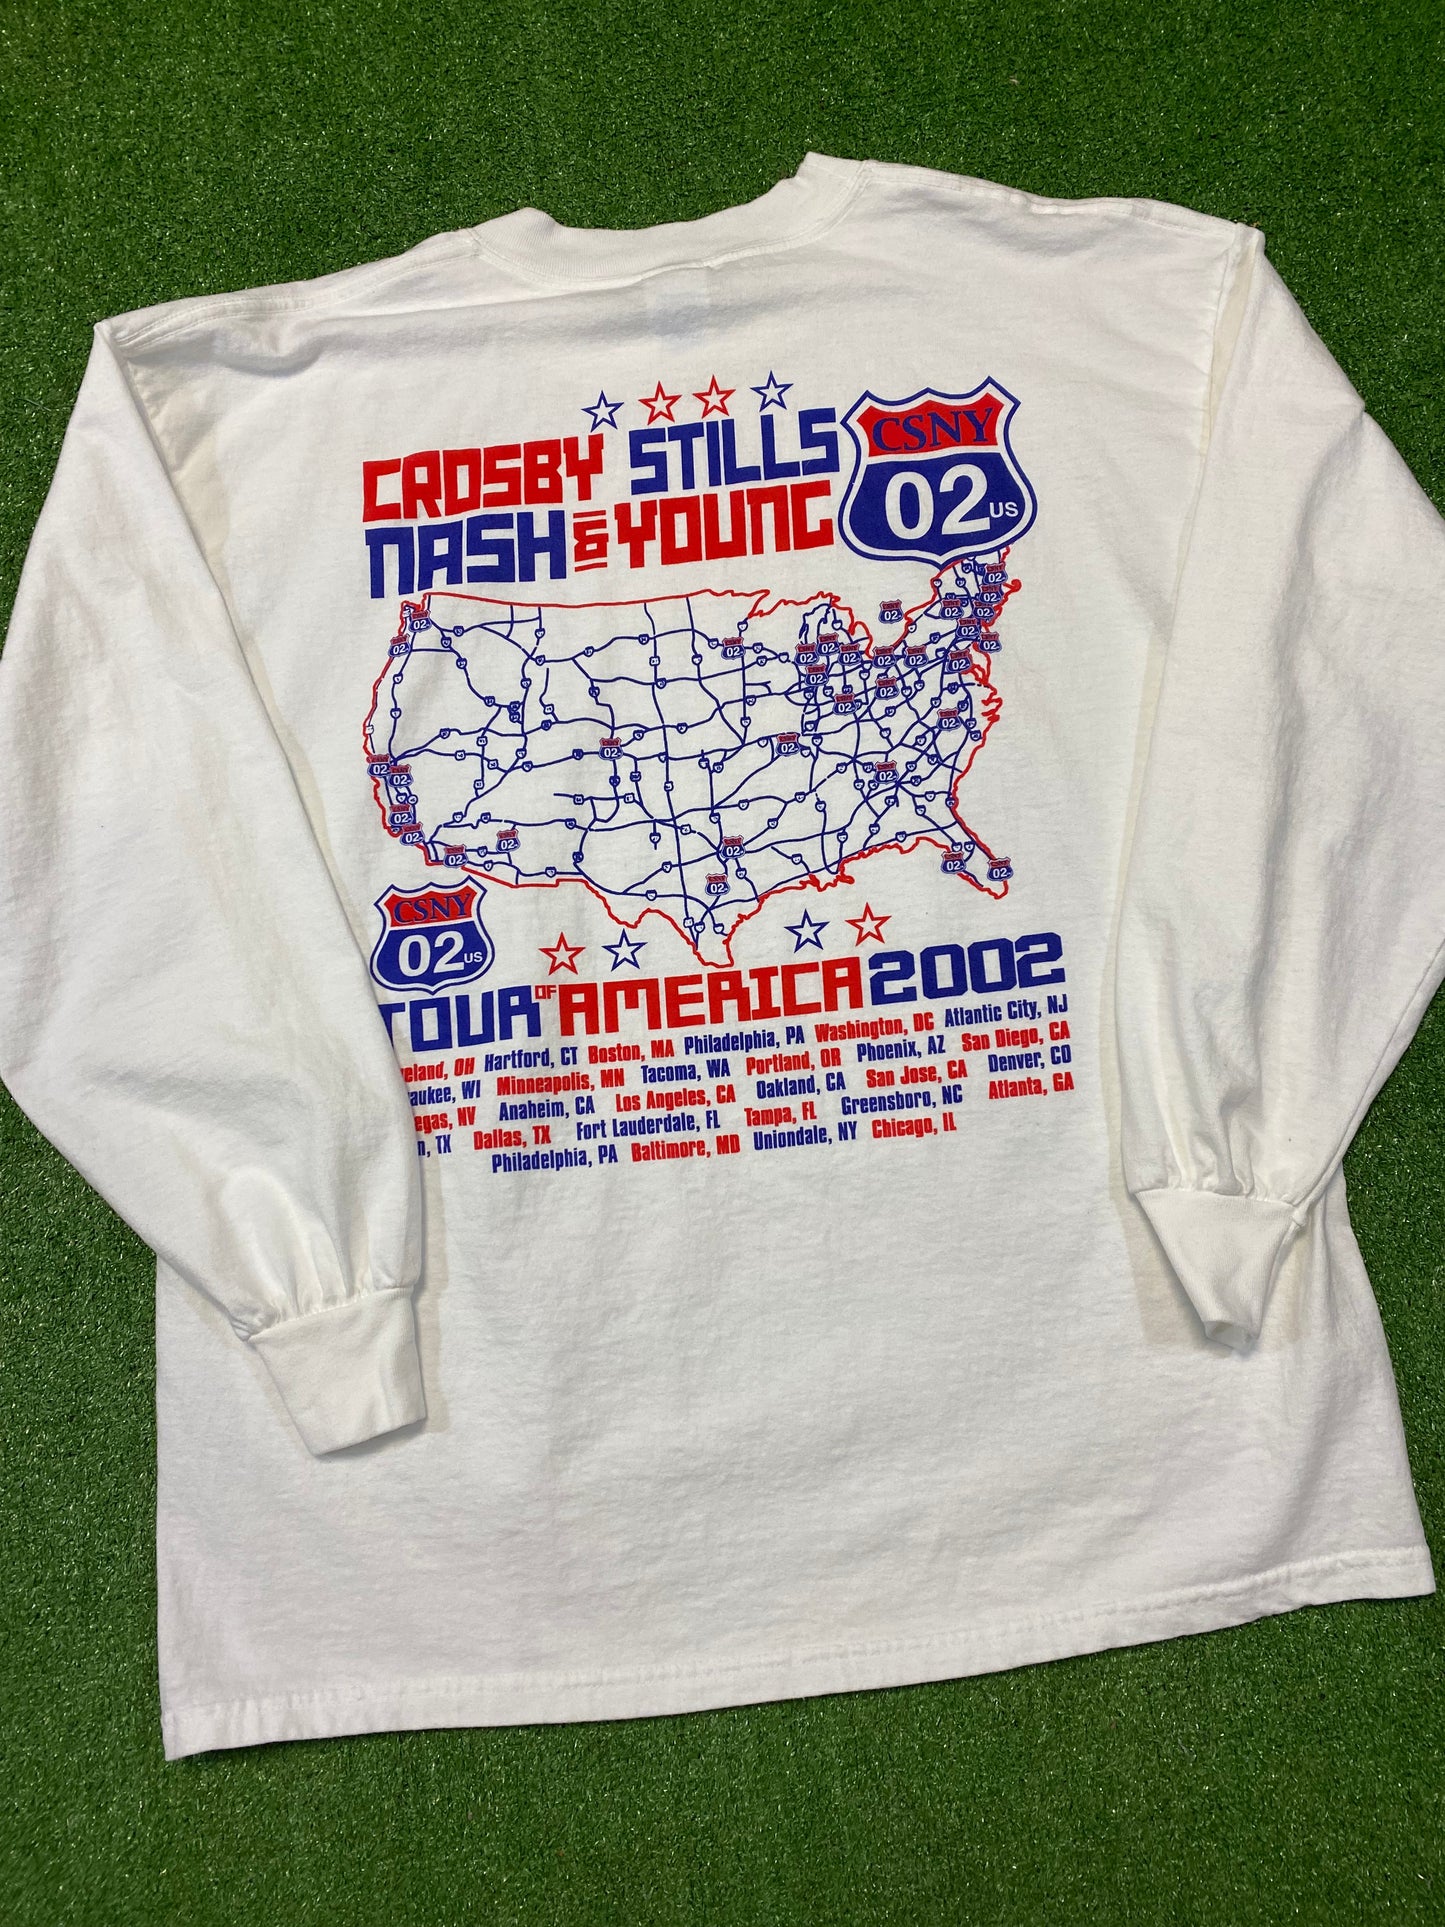 2002 Crosby Stills Nash & Young Longsleeve Shirt